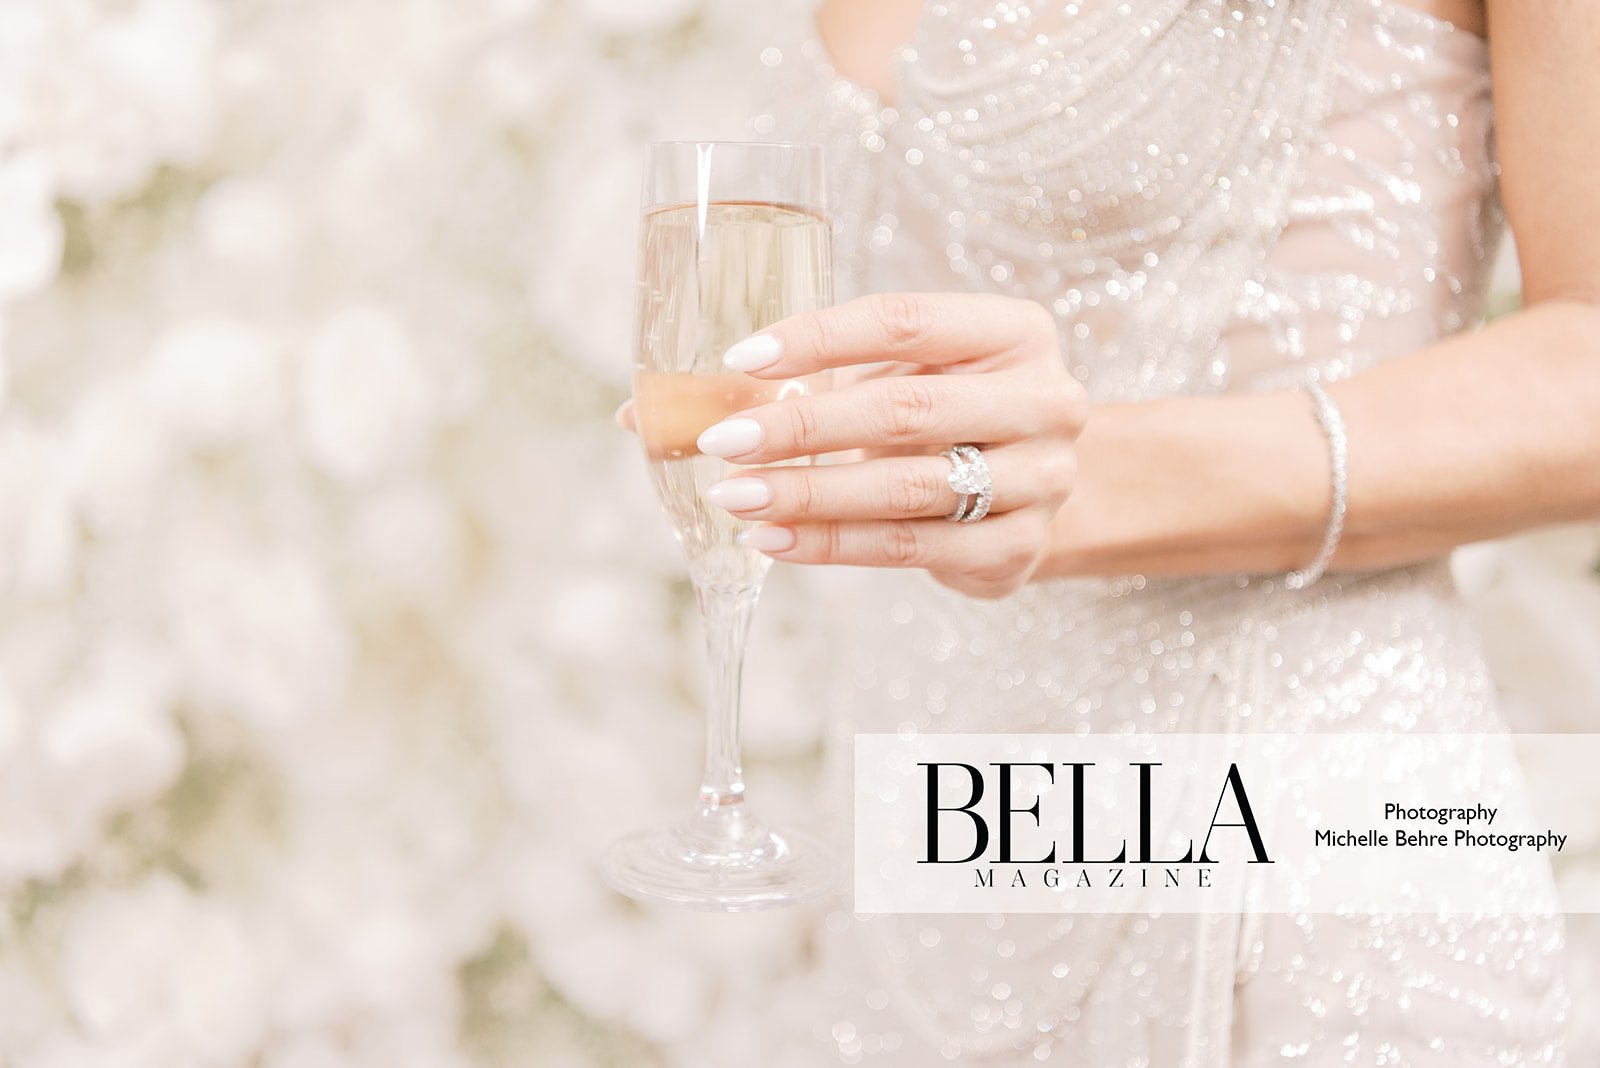 Michelle-Behre-Photography-BELLA-Magazine-Wedding-Event-La-Pulperia-New-York-140.jpg